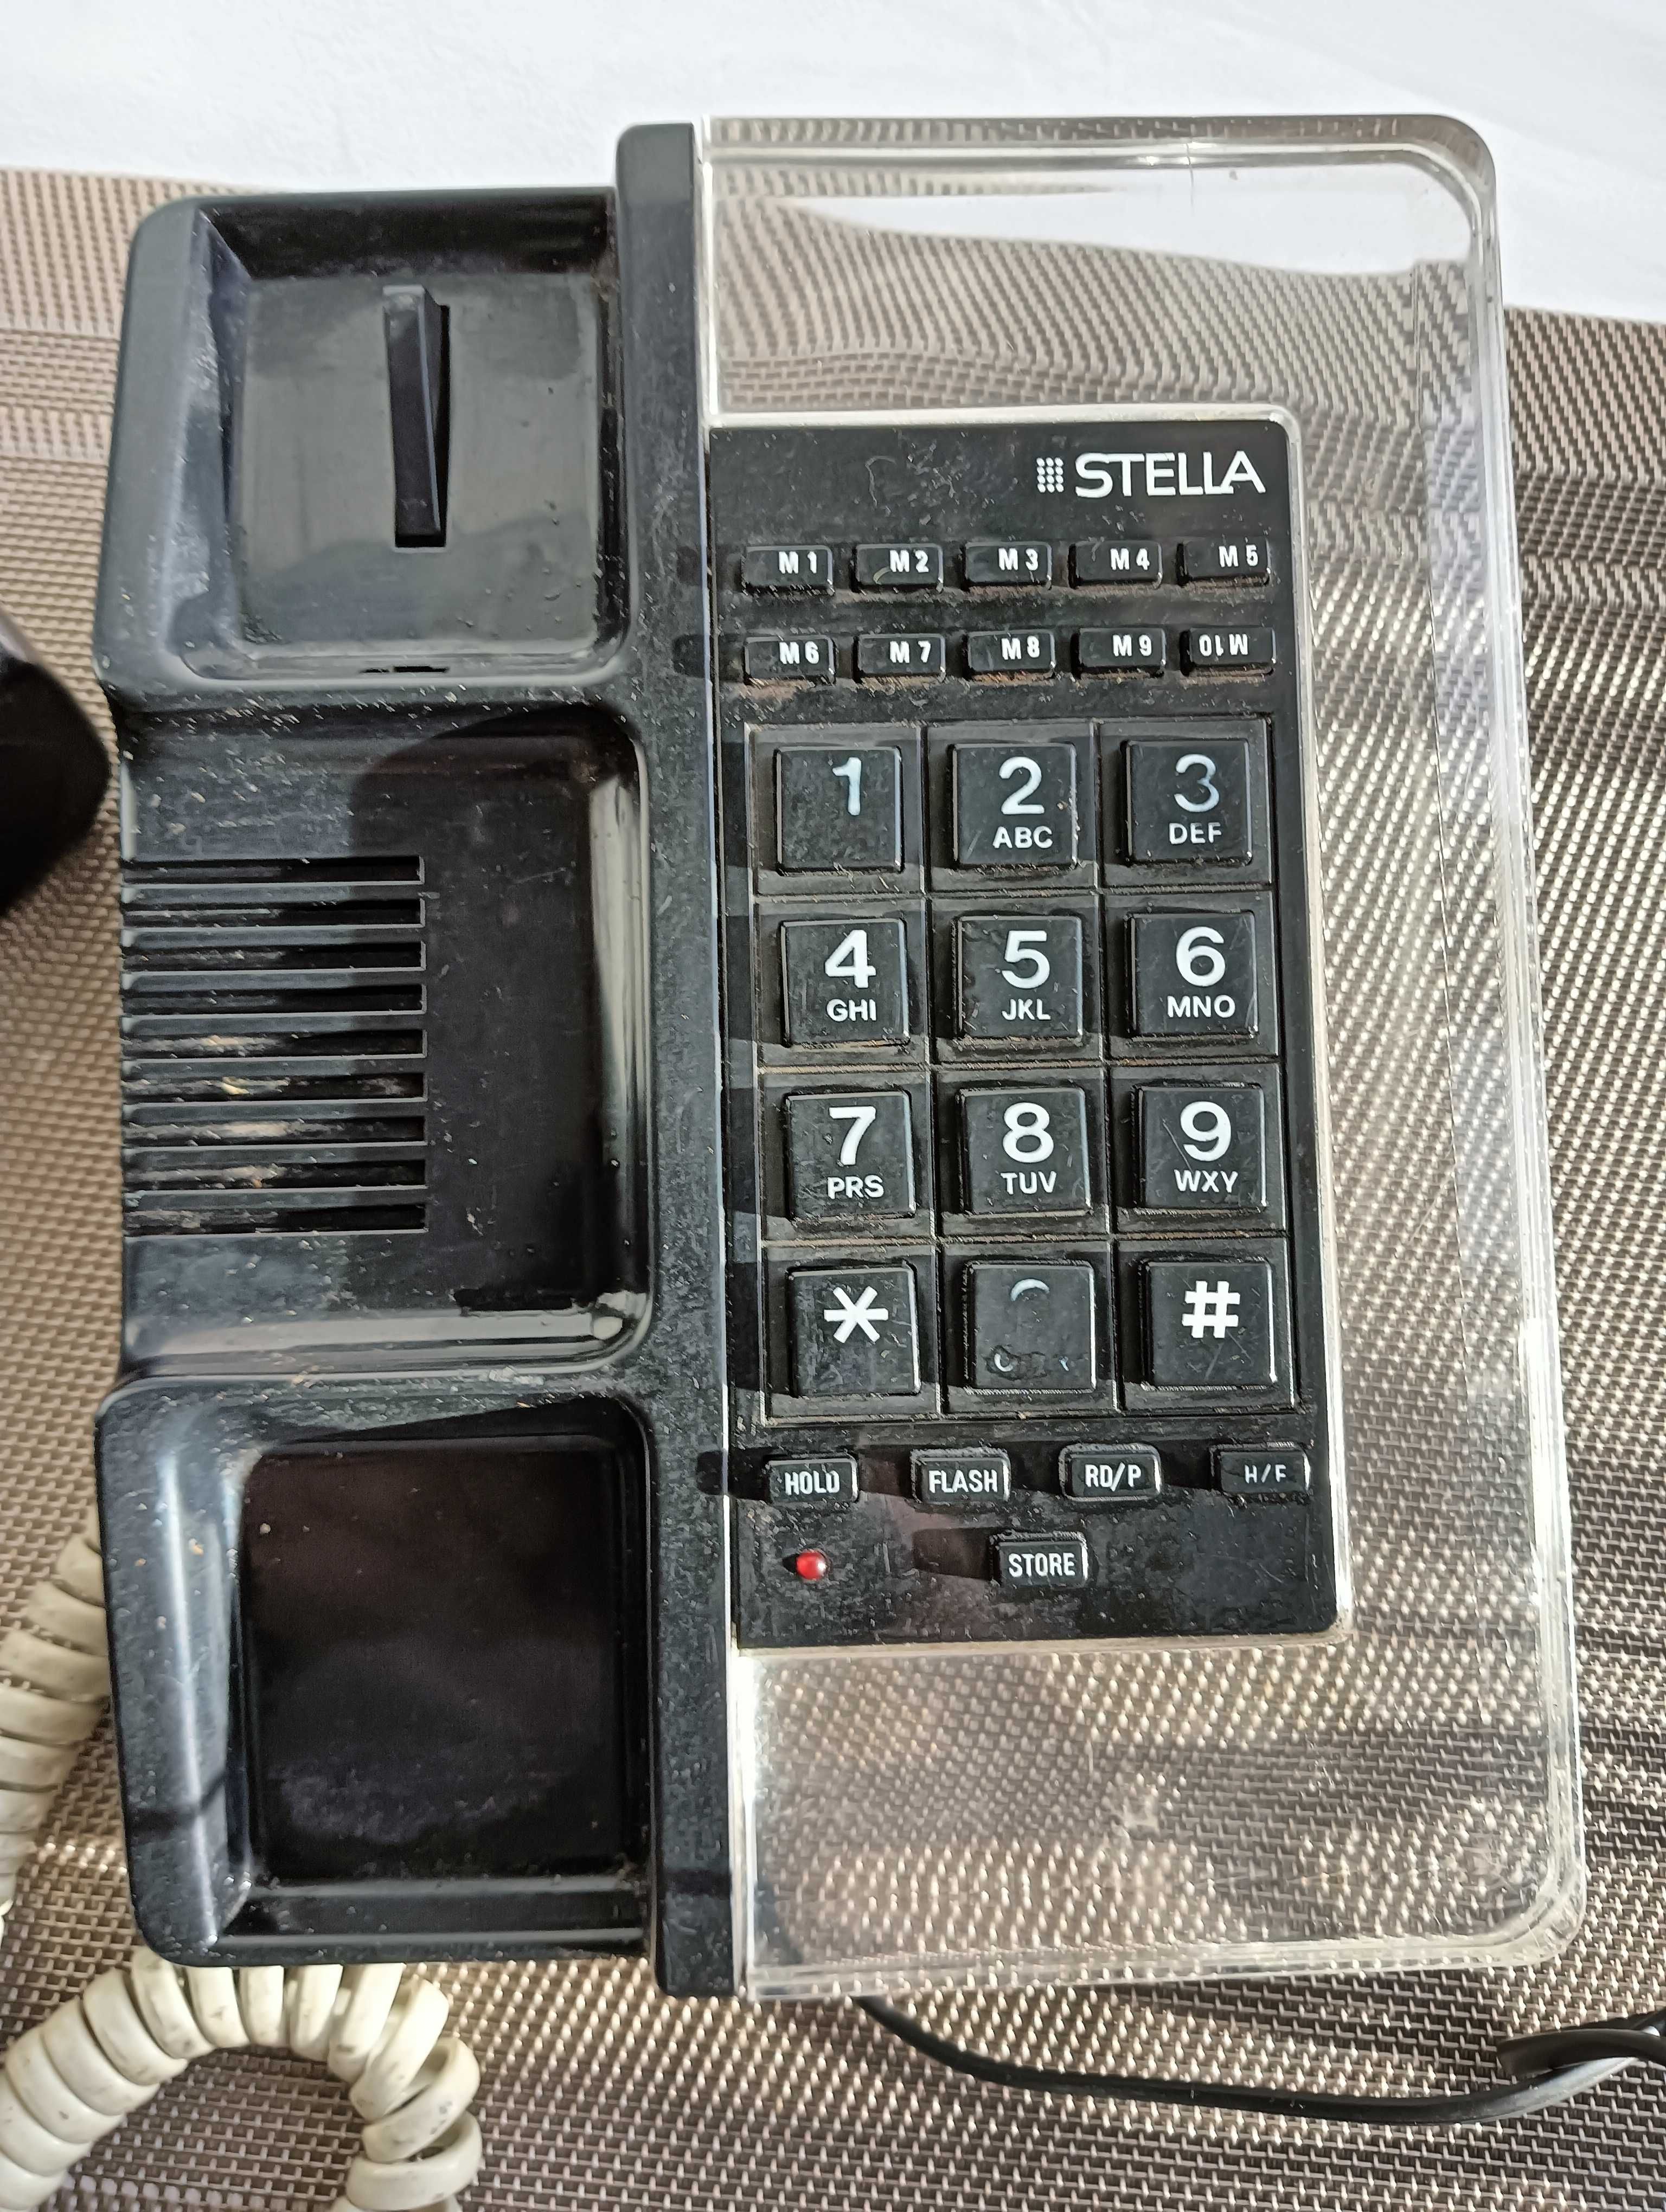 Stary kolekcjonerski telefon stacjonarny - Stella